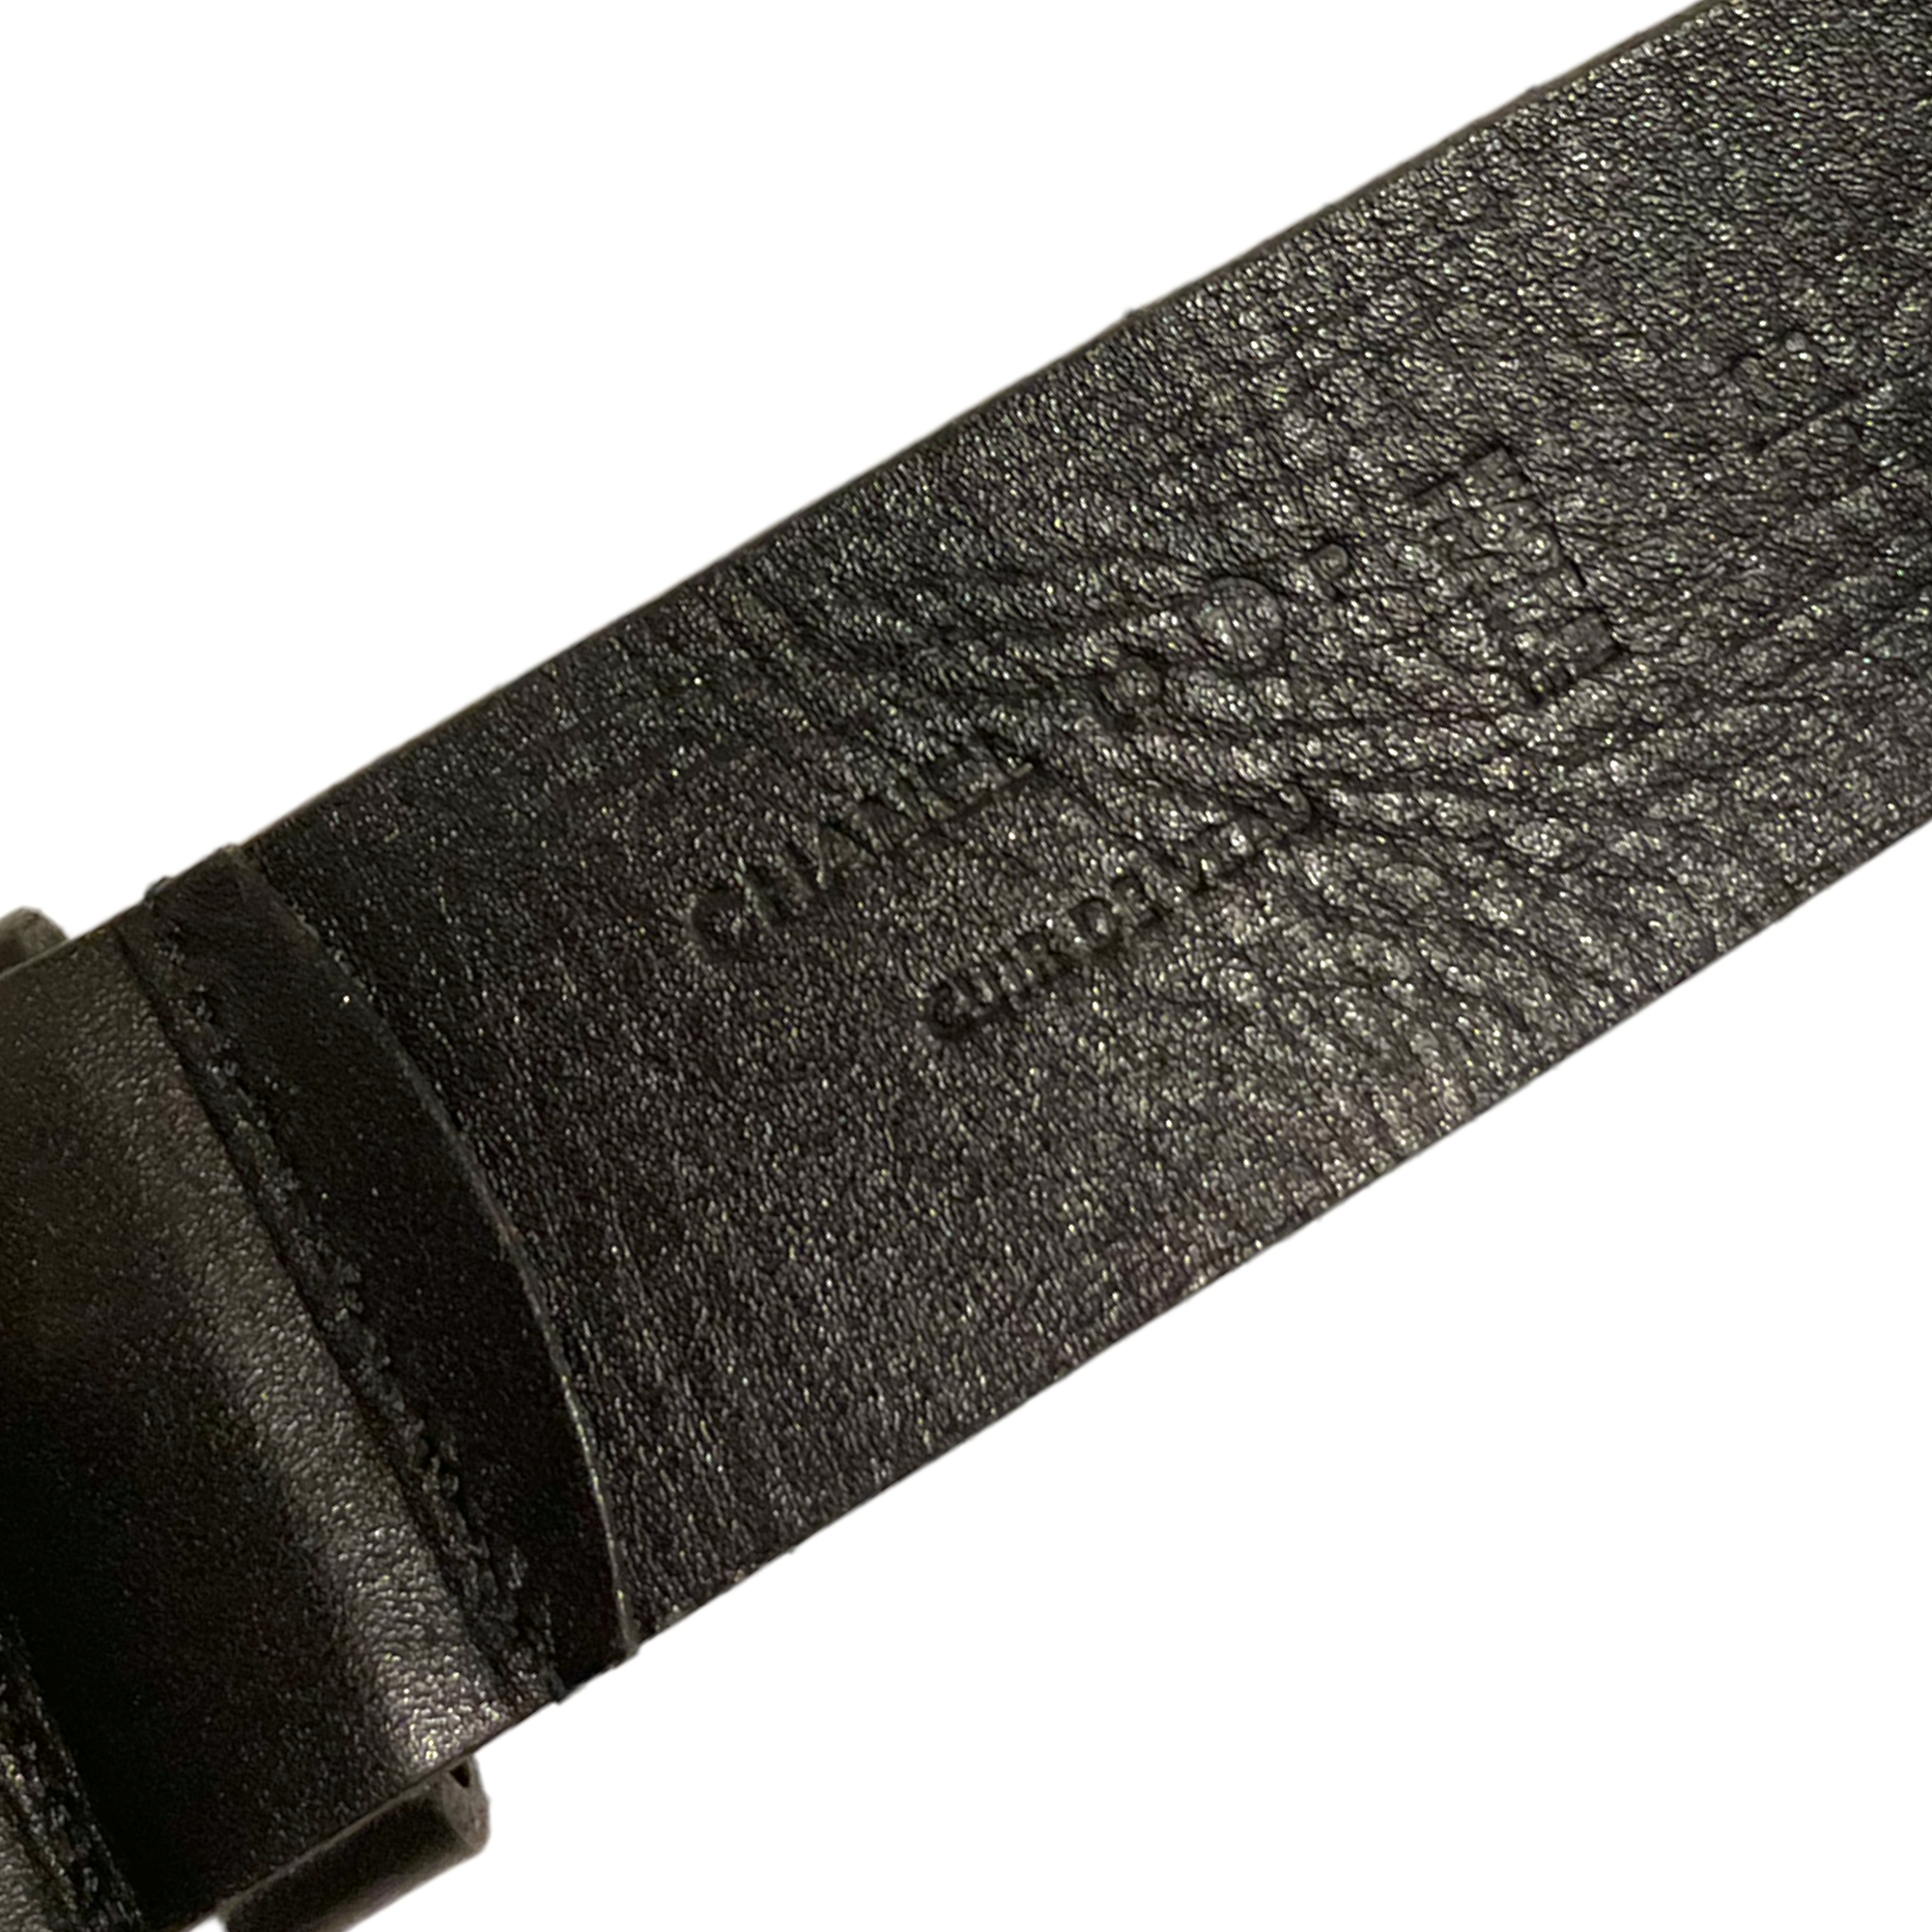 CHANEL Black Leather CC Stud & Lion Motif Belt, Silver Hardware | SIZE: 32/80|